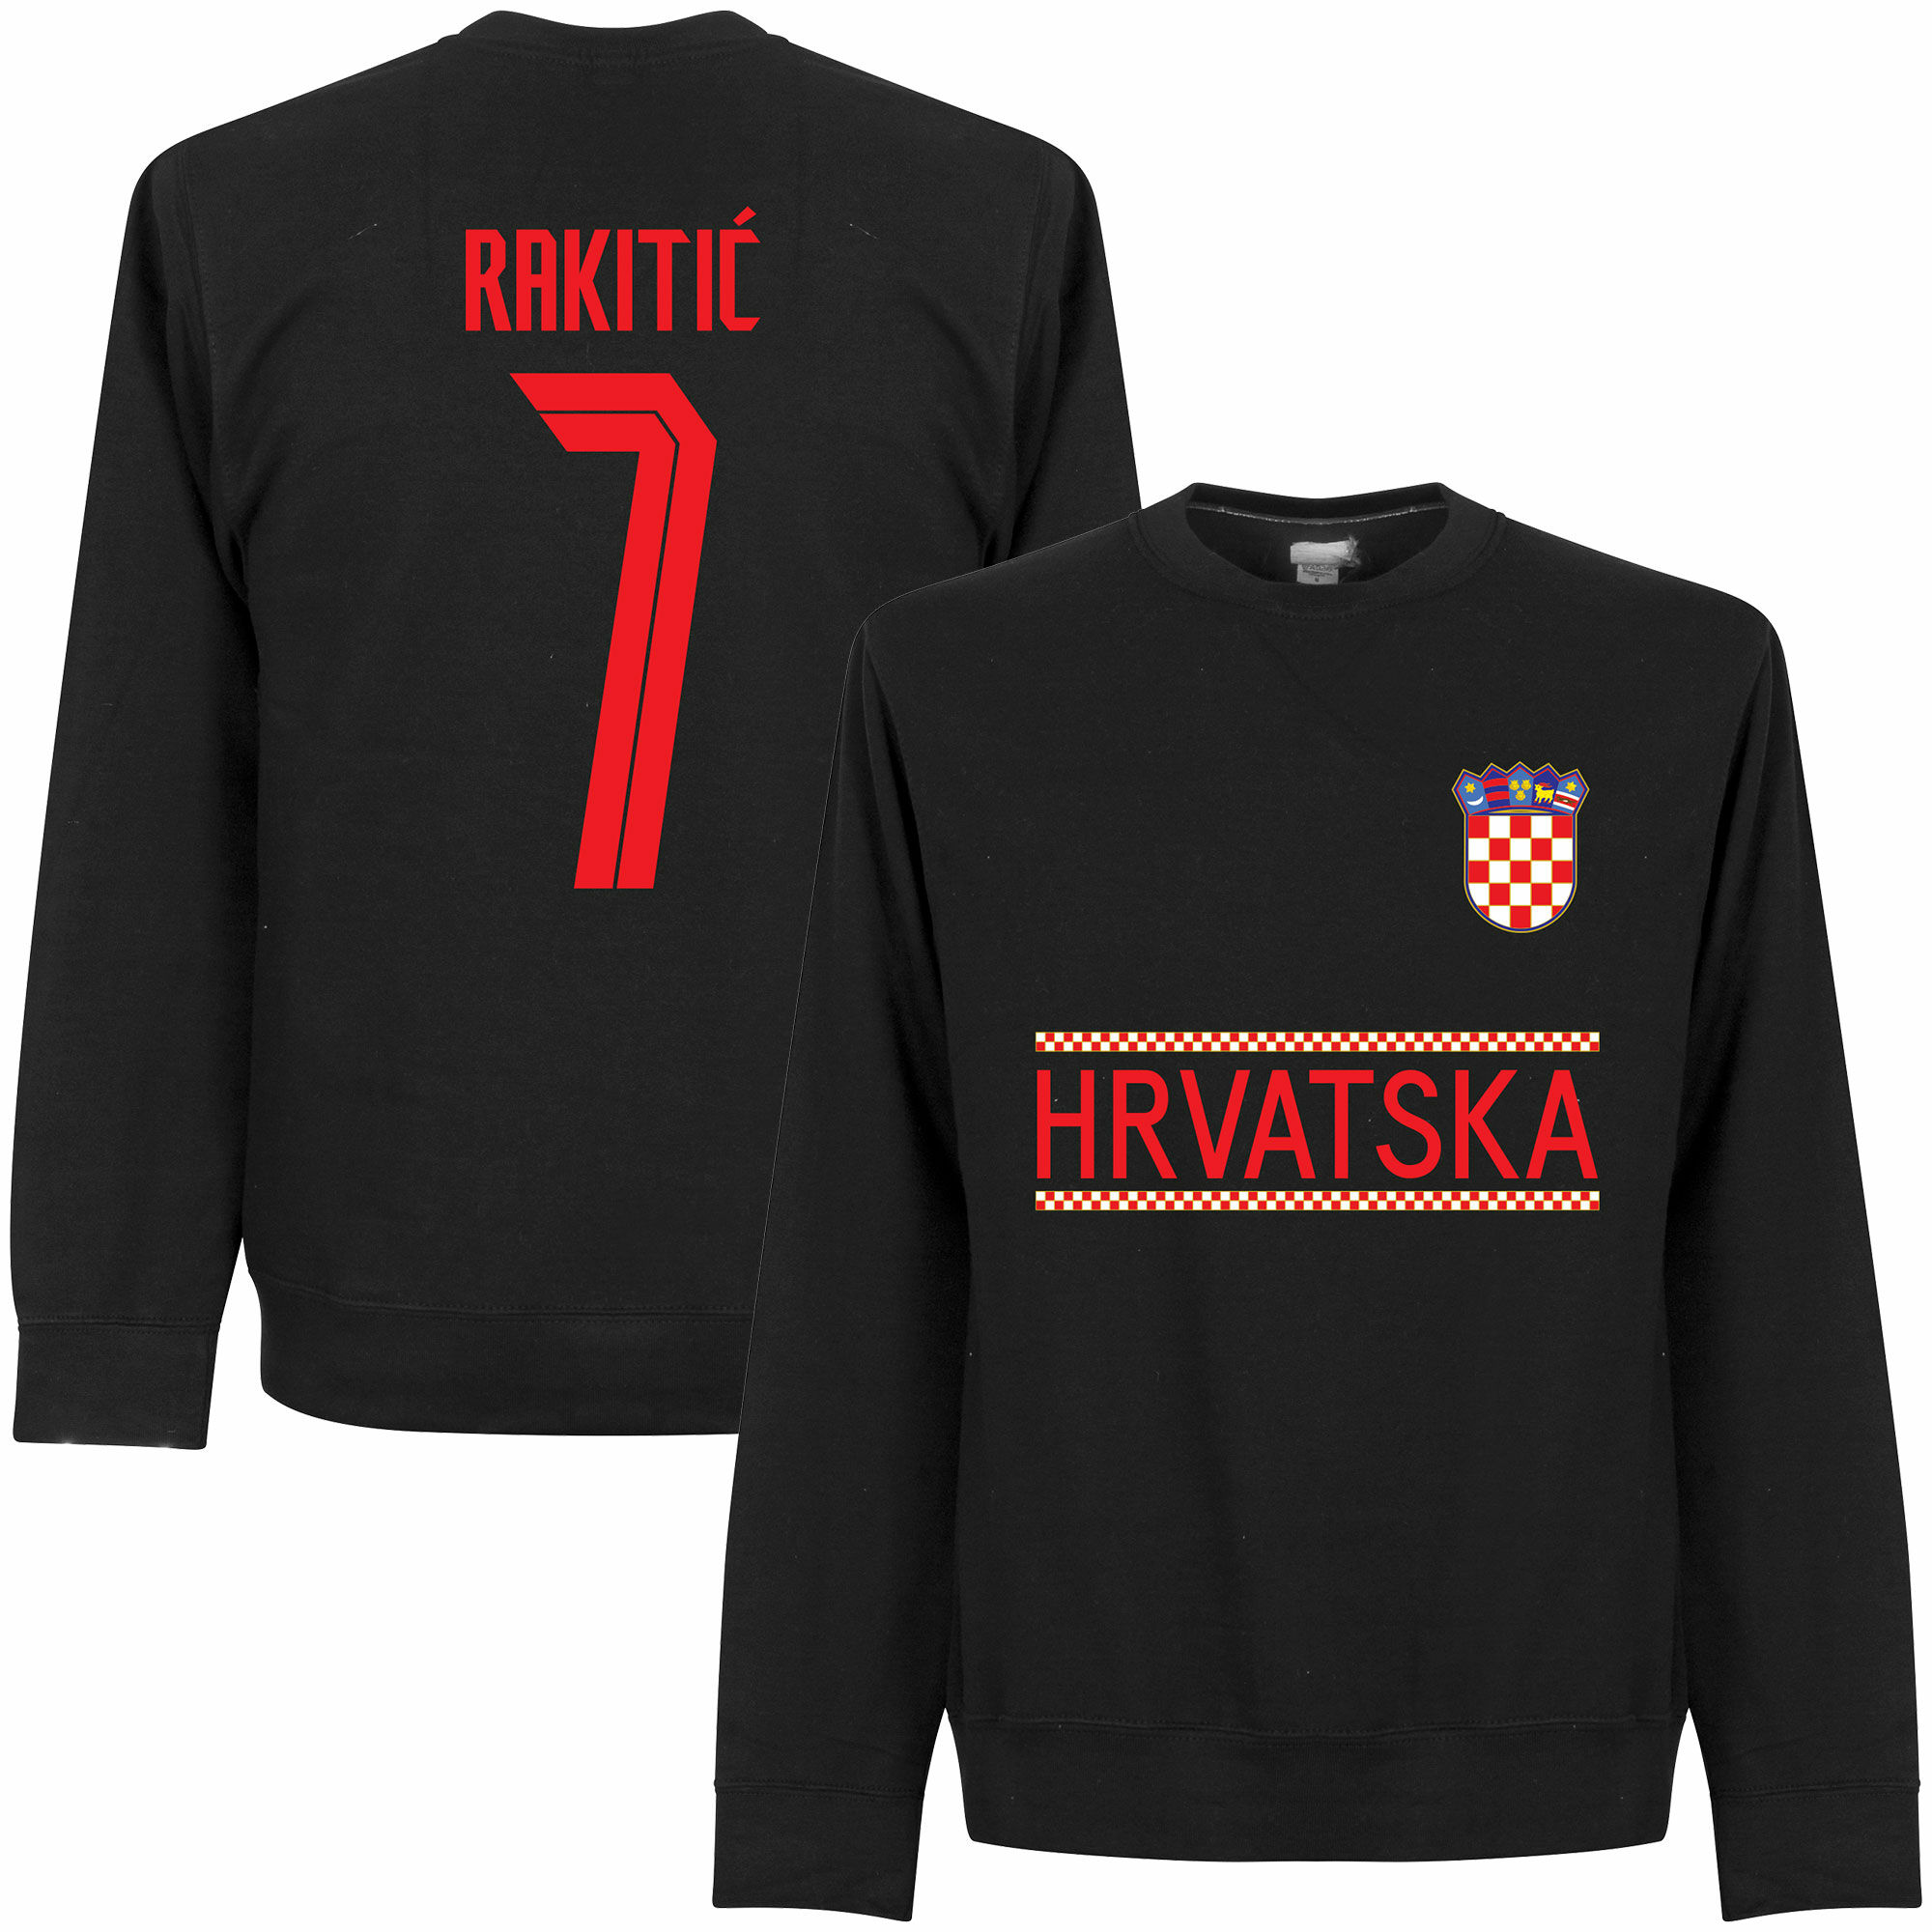 Chorvatsko - Mikina - černá, číslo 7, Ivan Rakitić